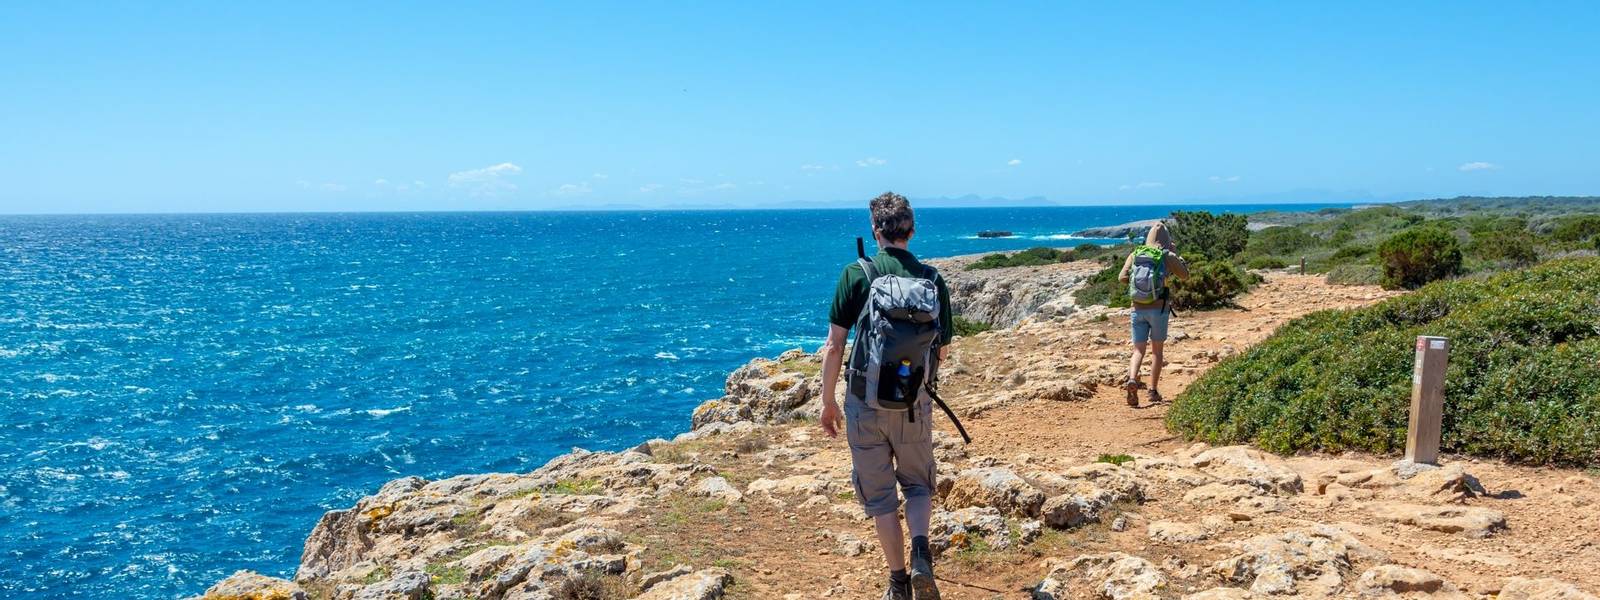 Hikers on a coastal path by the sea in Menorca, Balearic islands, Spain